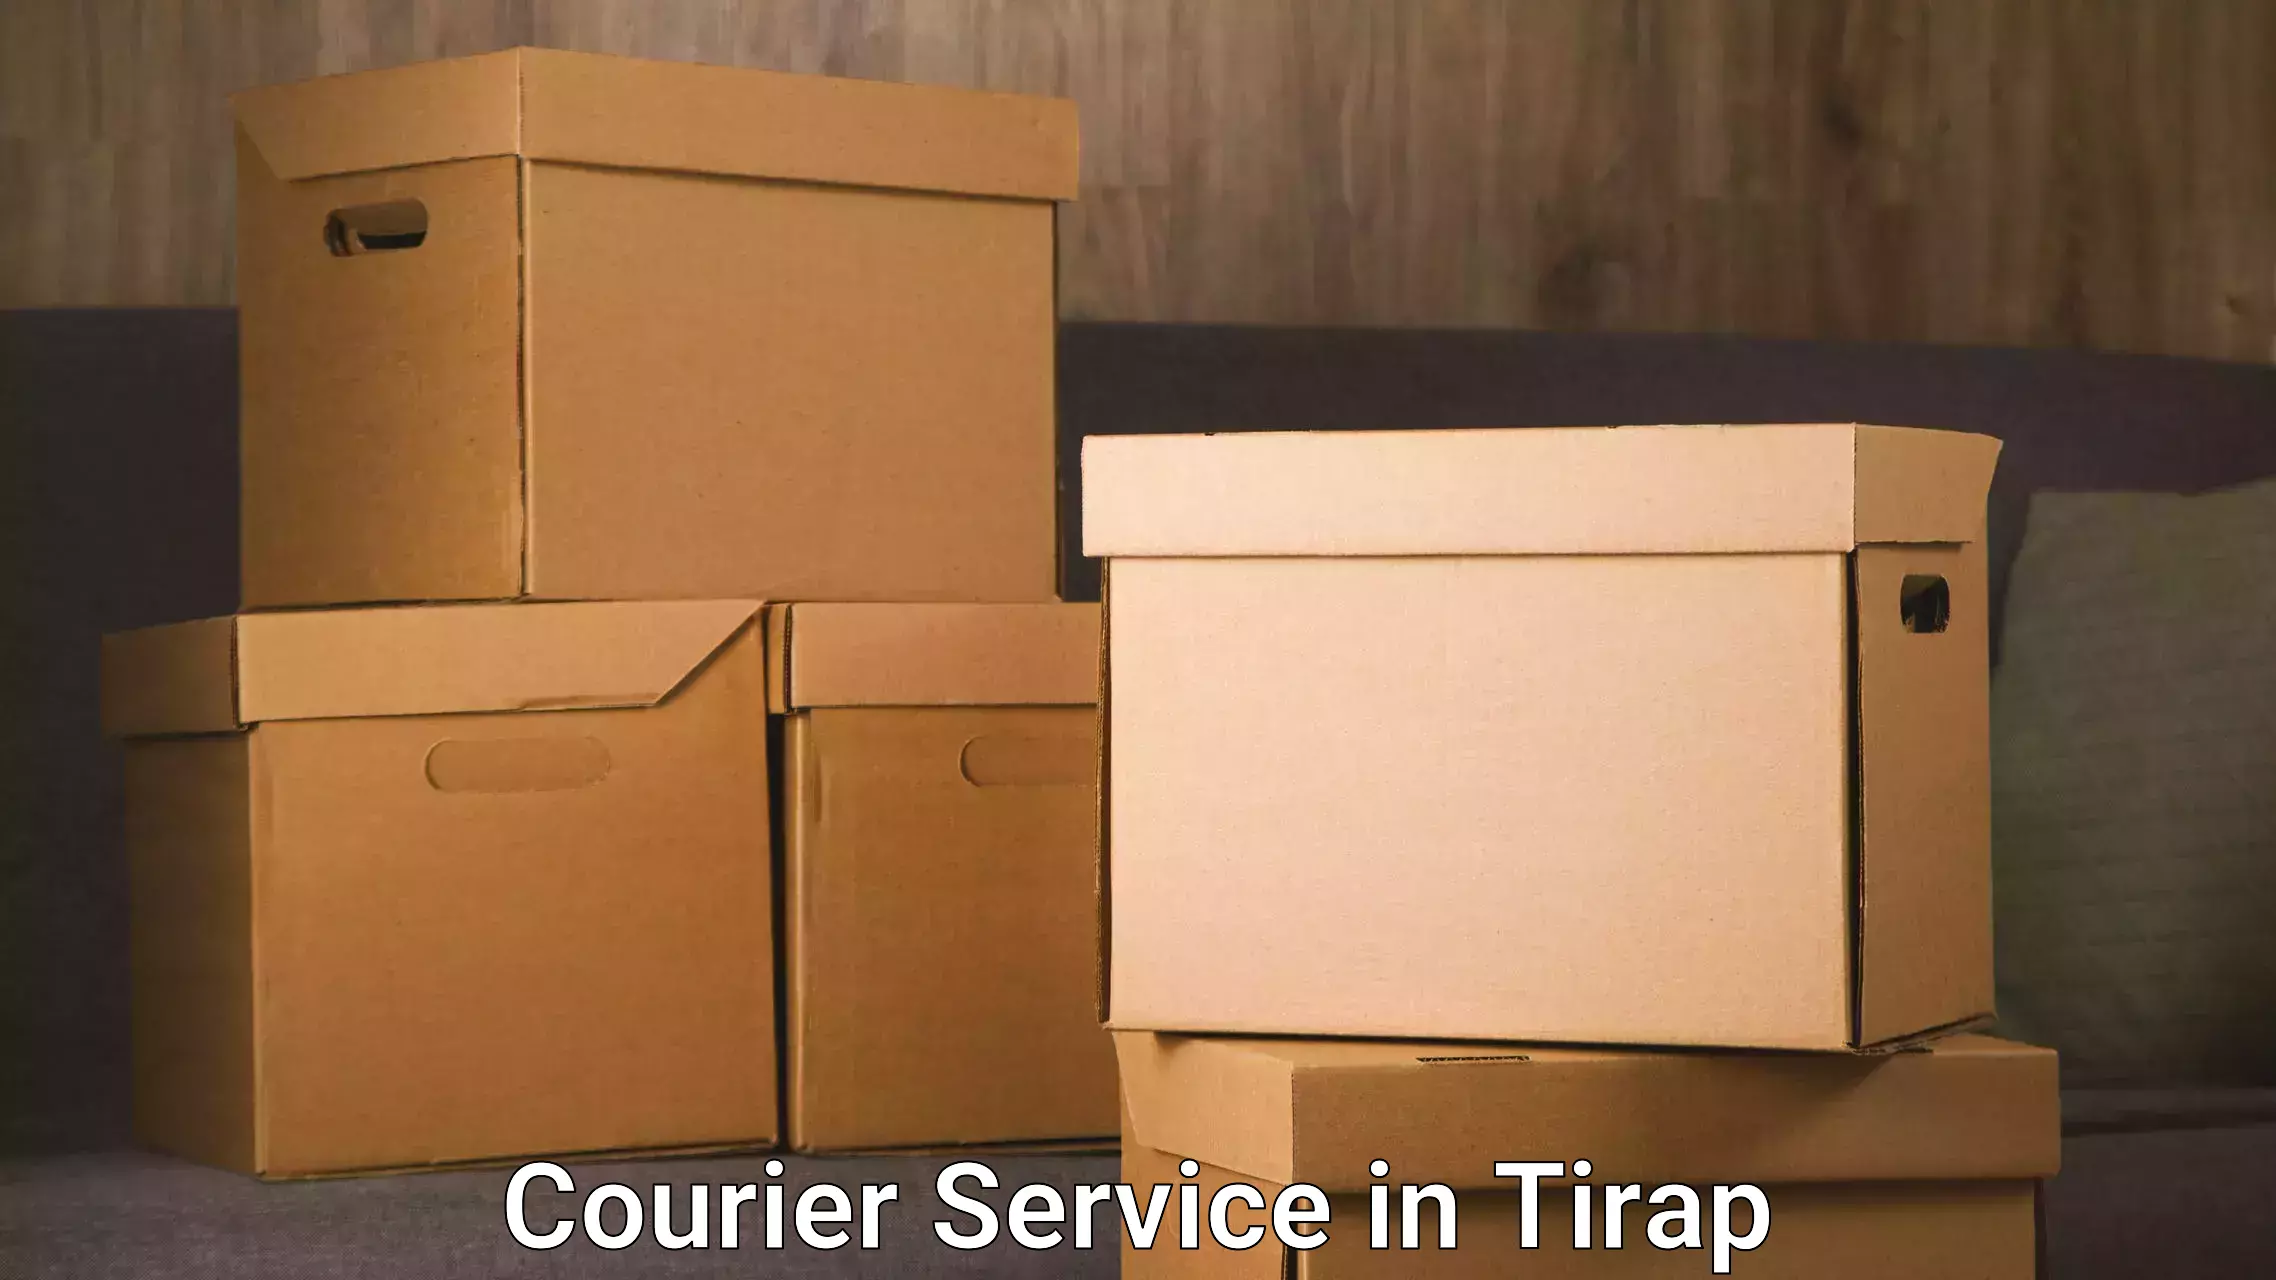 Punctual parcel services in Tirap